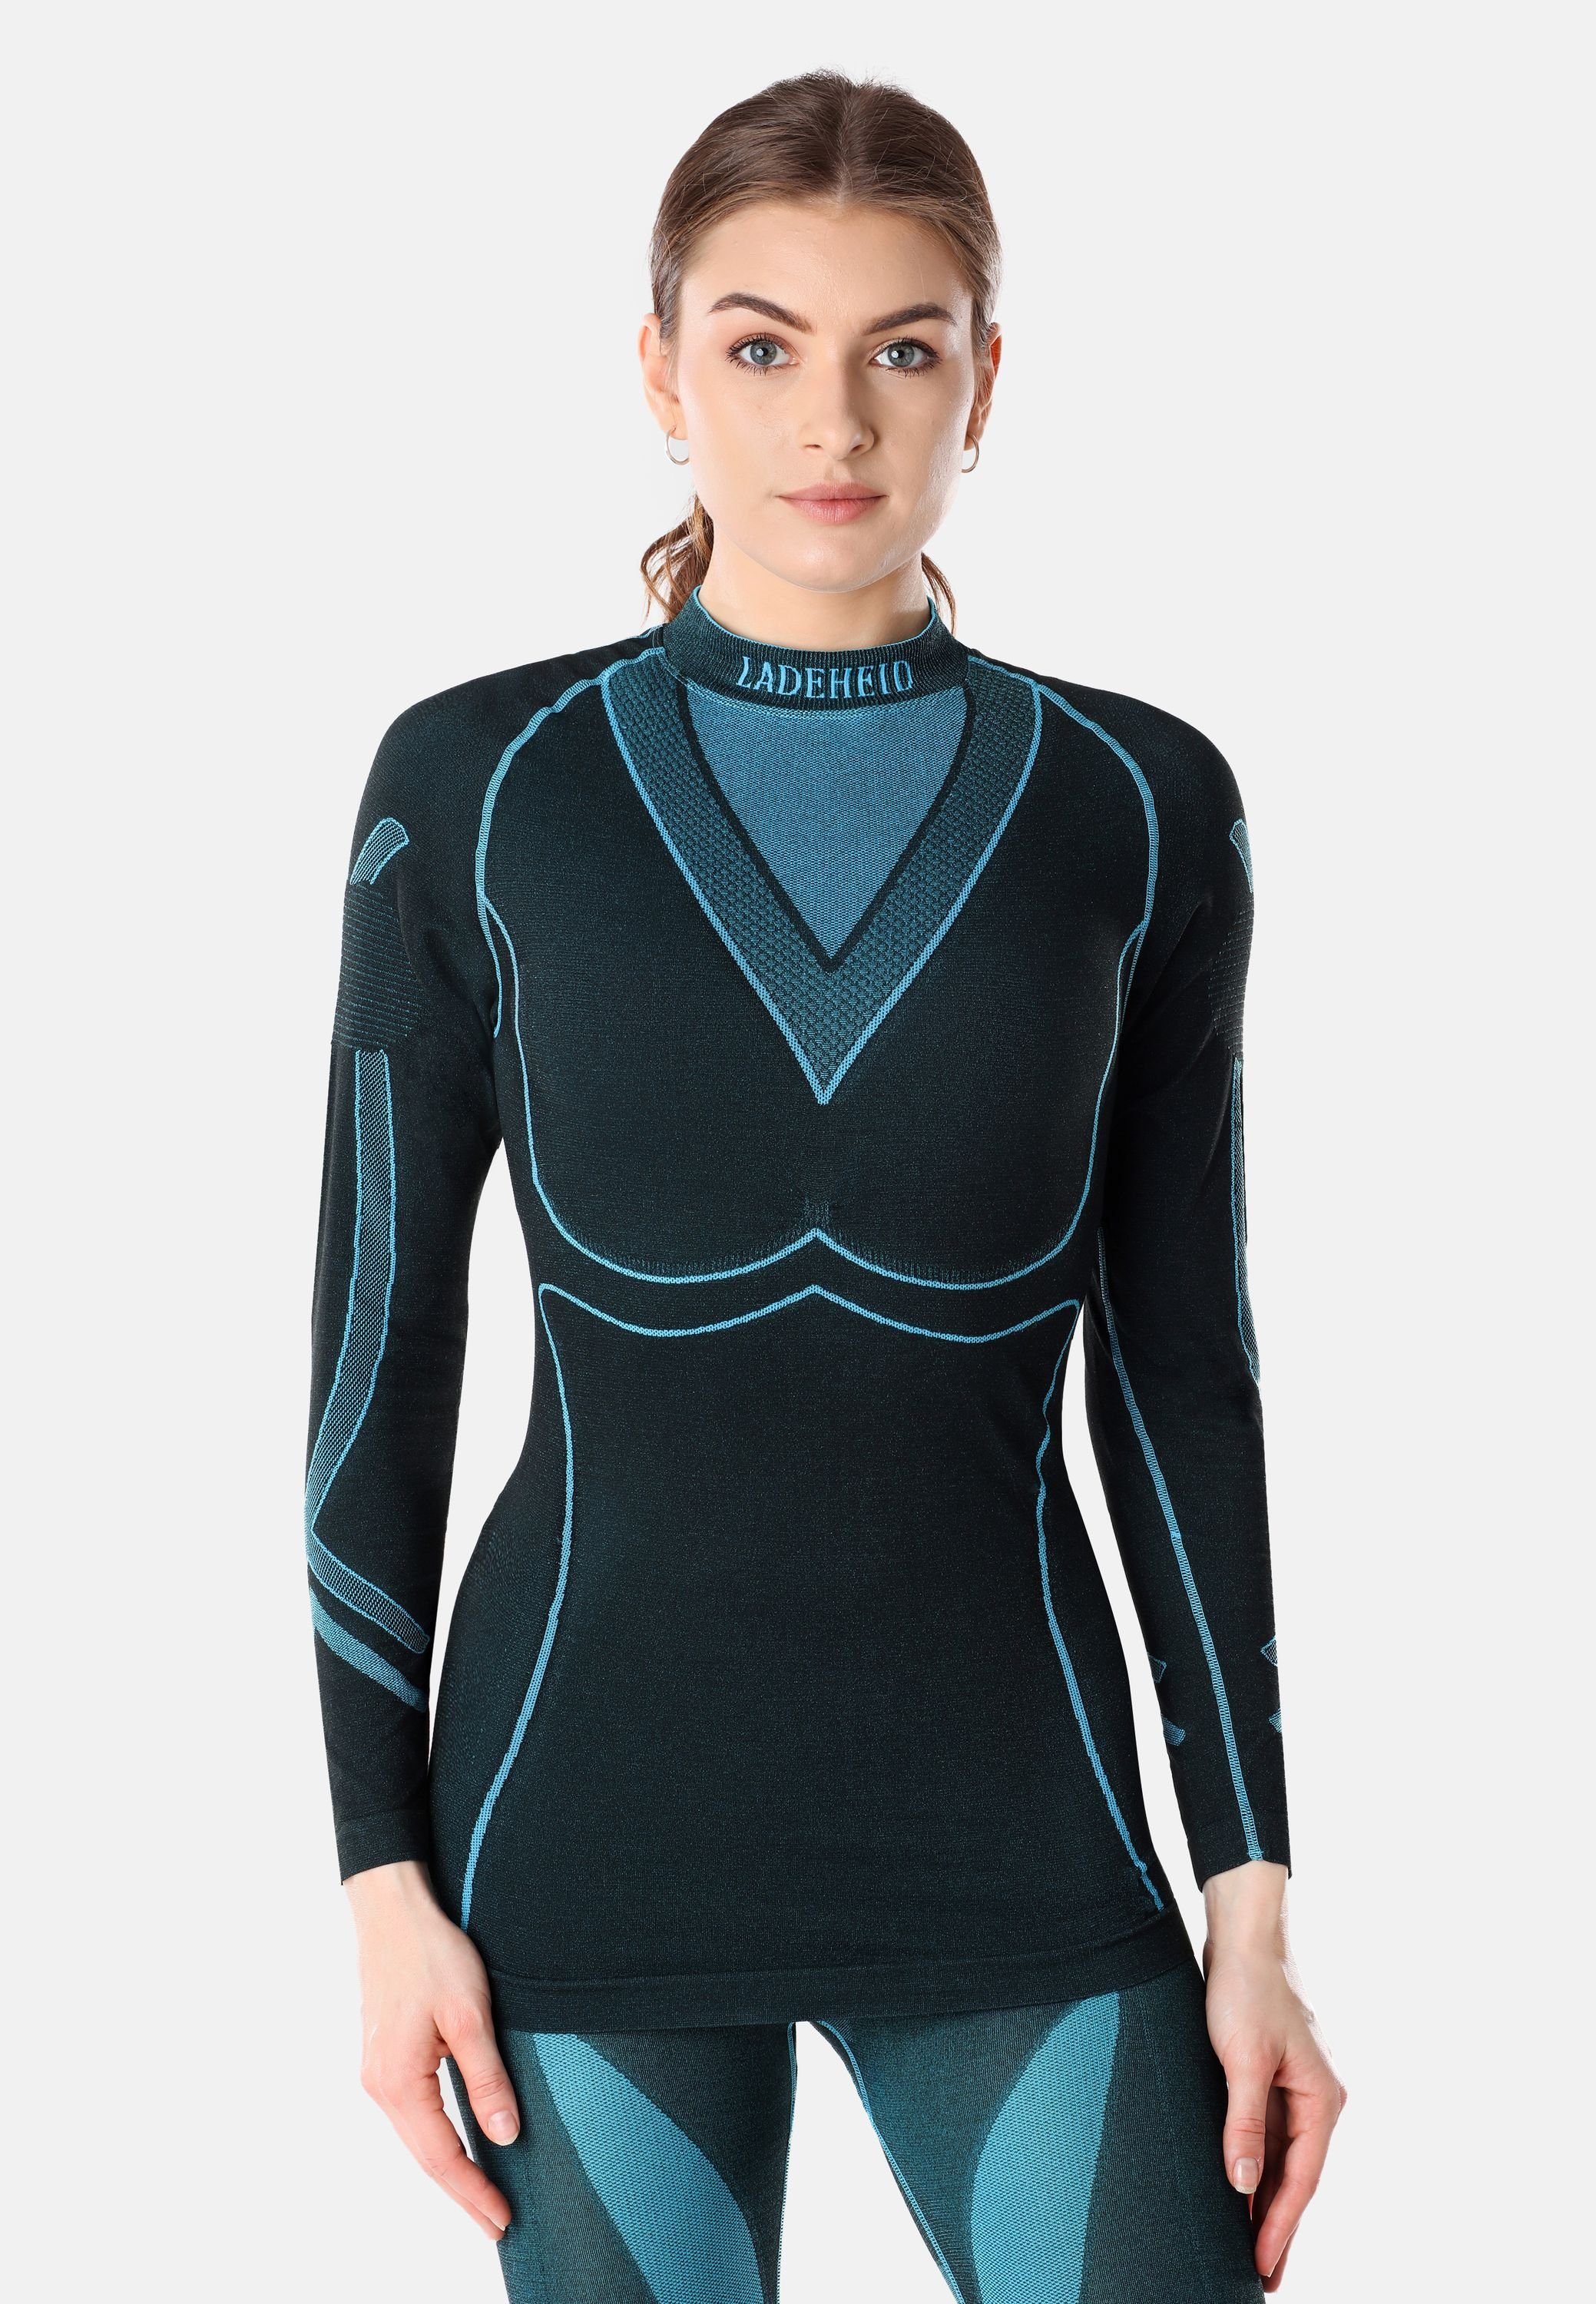 langarm Funktionsunterhemd LAGI004 Thermoaktiv Damen Schwarz/Turquoise Funktionsunterwäsche Shirt Ladeheid